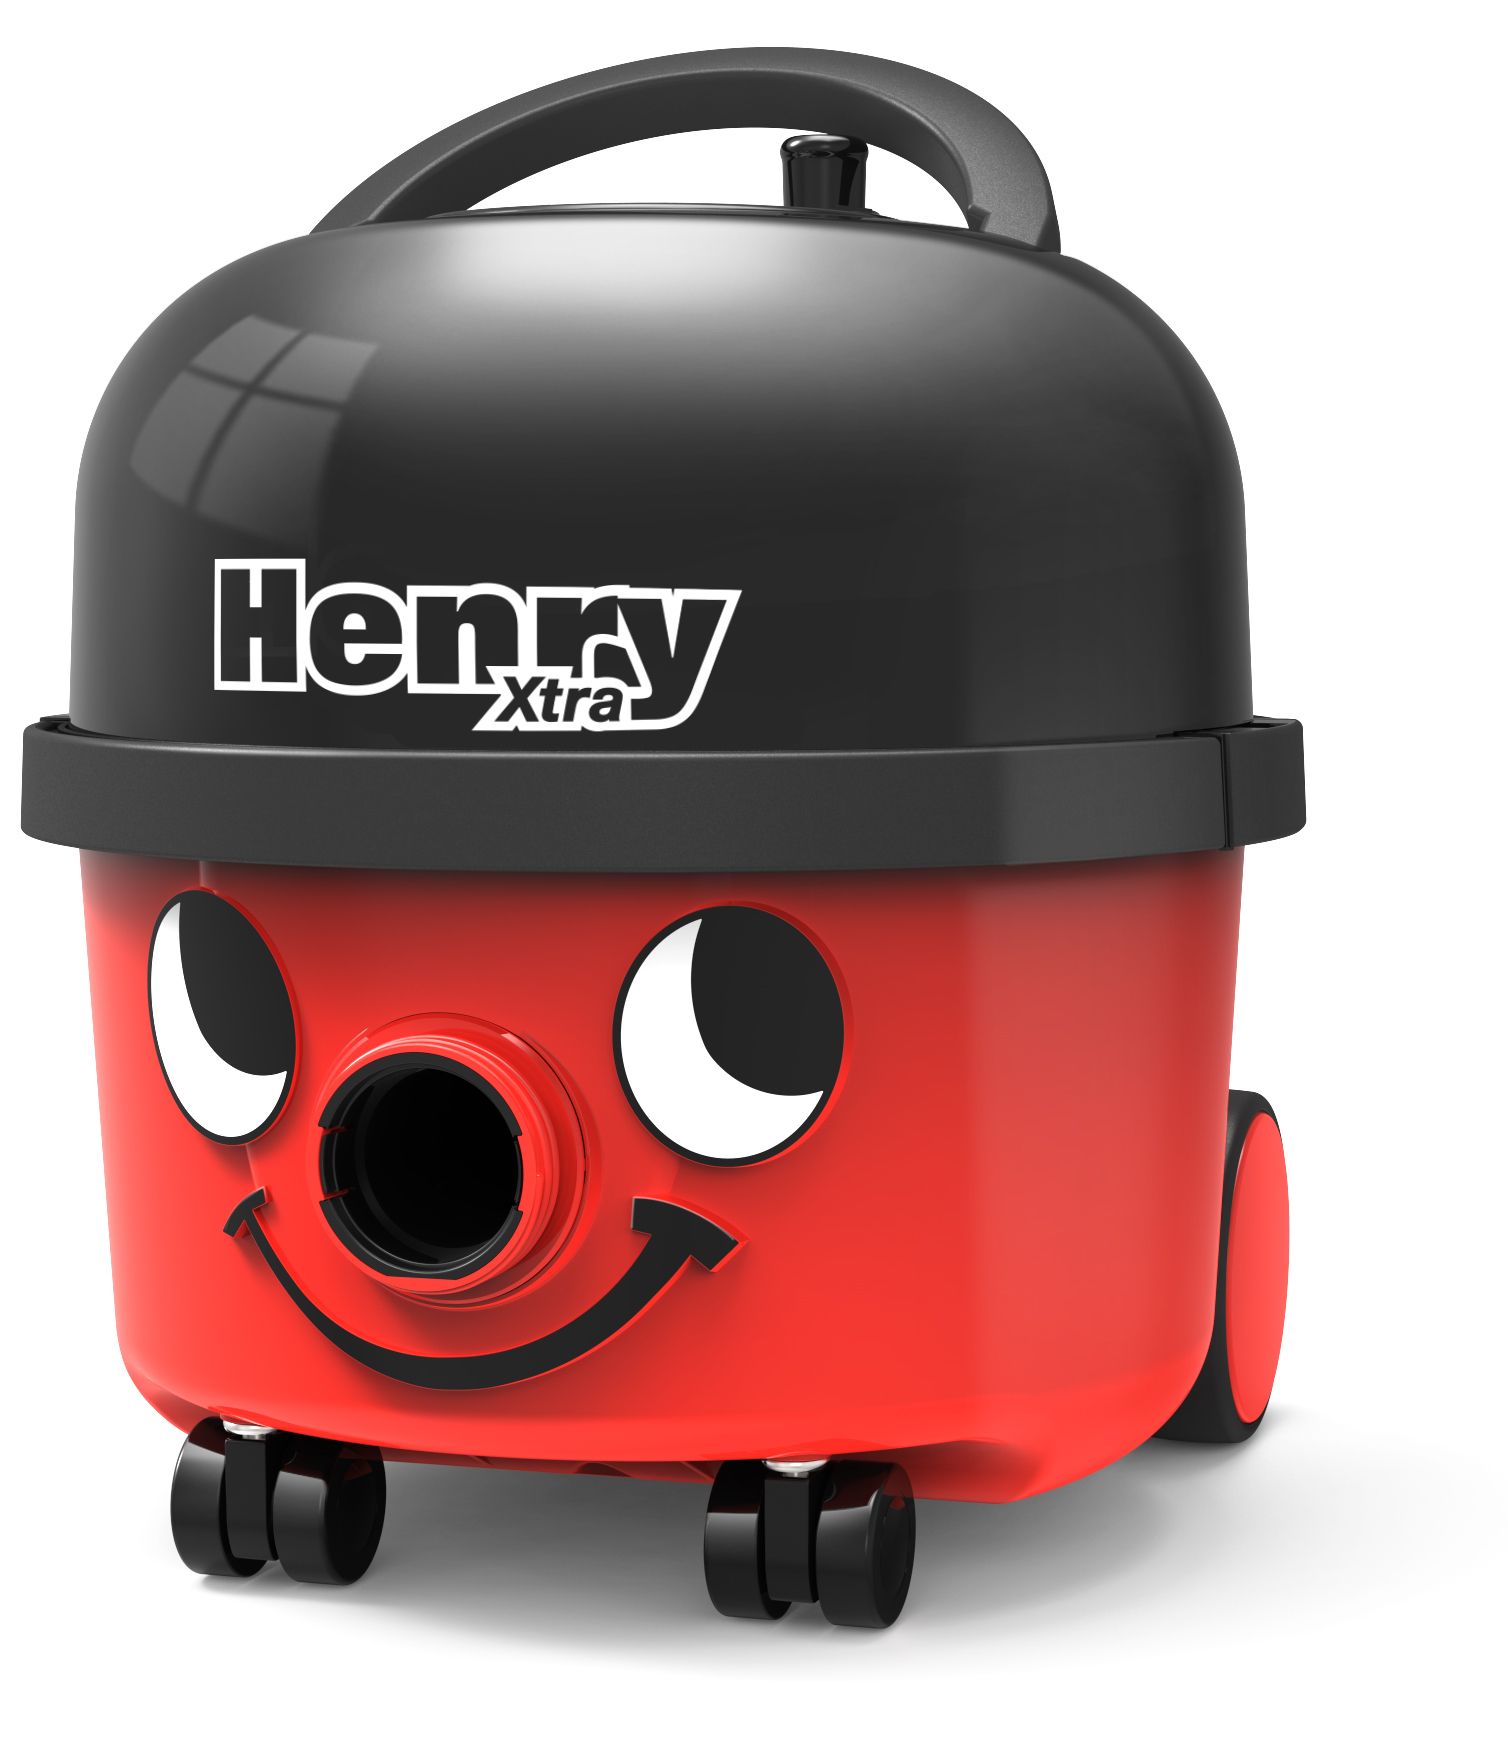 Stofzuiger Henry Xtra HVX160-11 rood met kit XS0